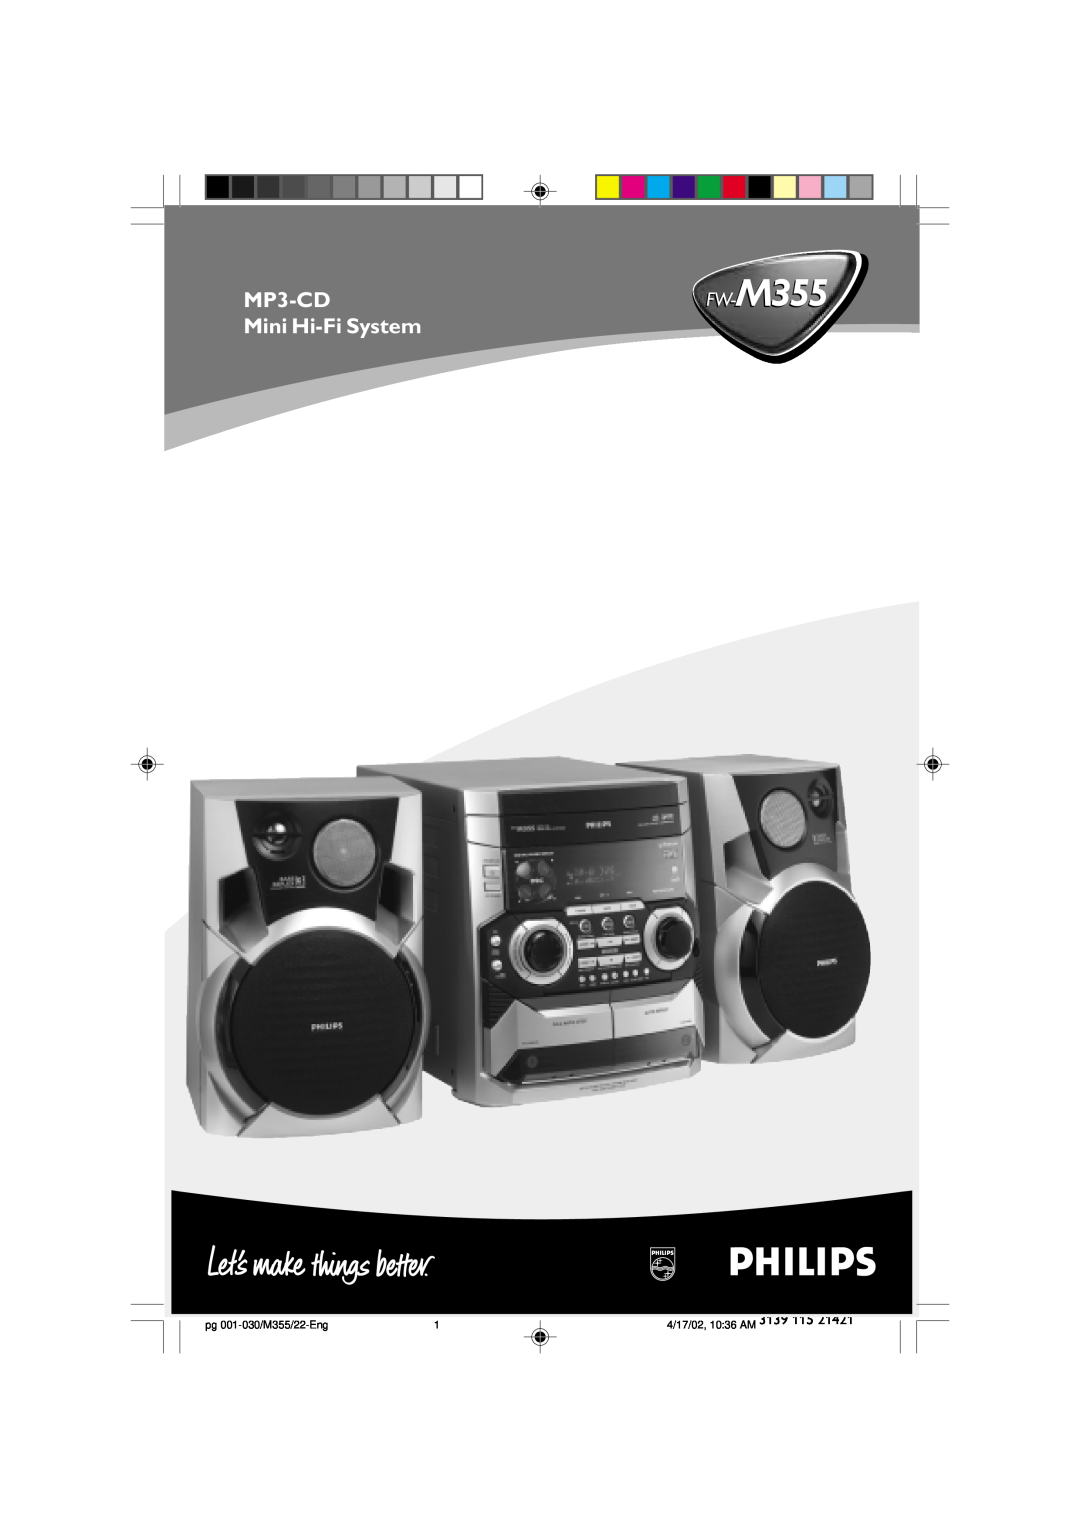 Philips FW-M355 manual MP3-CD, Mini Hi-FiSystem, pg 001-030/M355/22-Eng, 4/17/02, 10 36 AM 